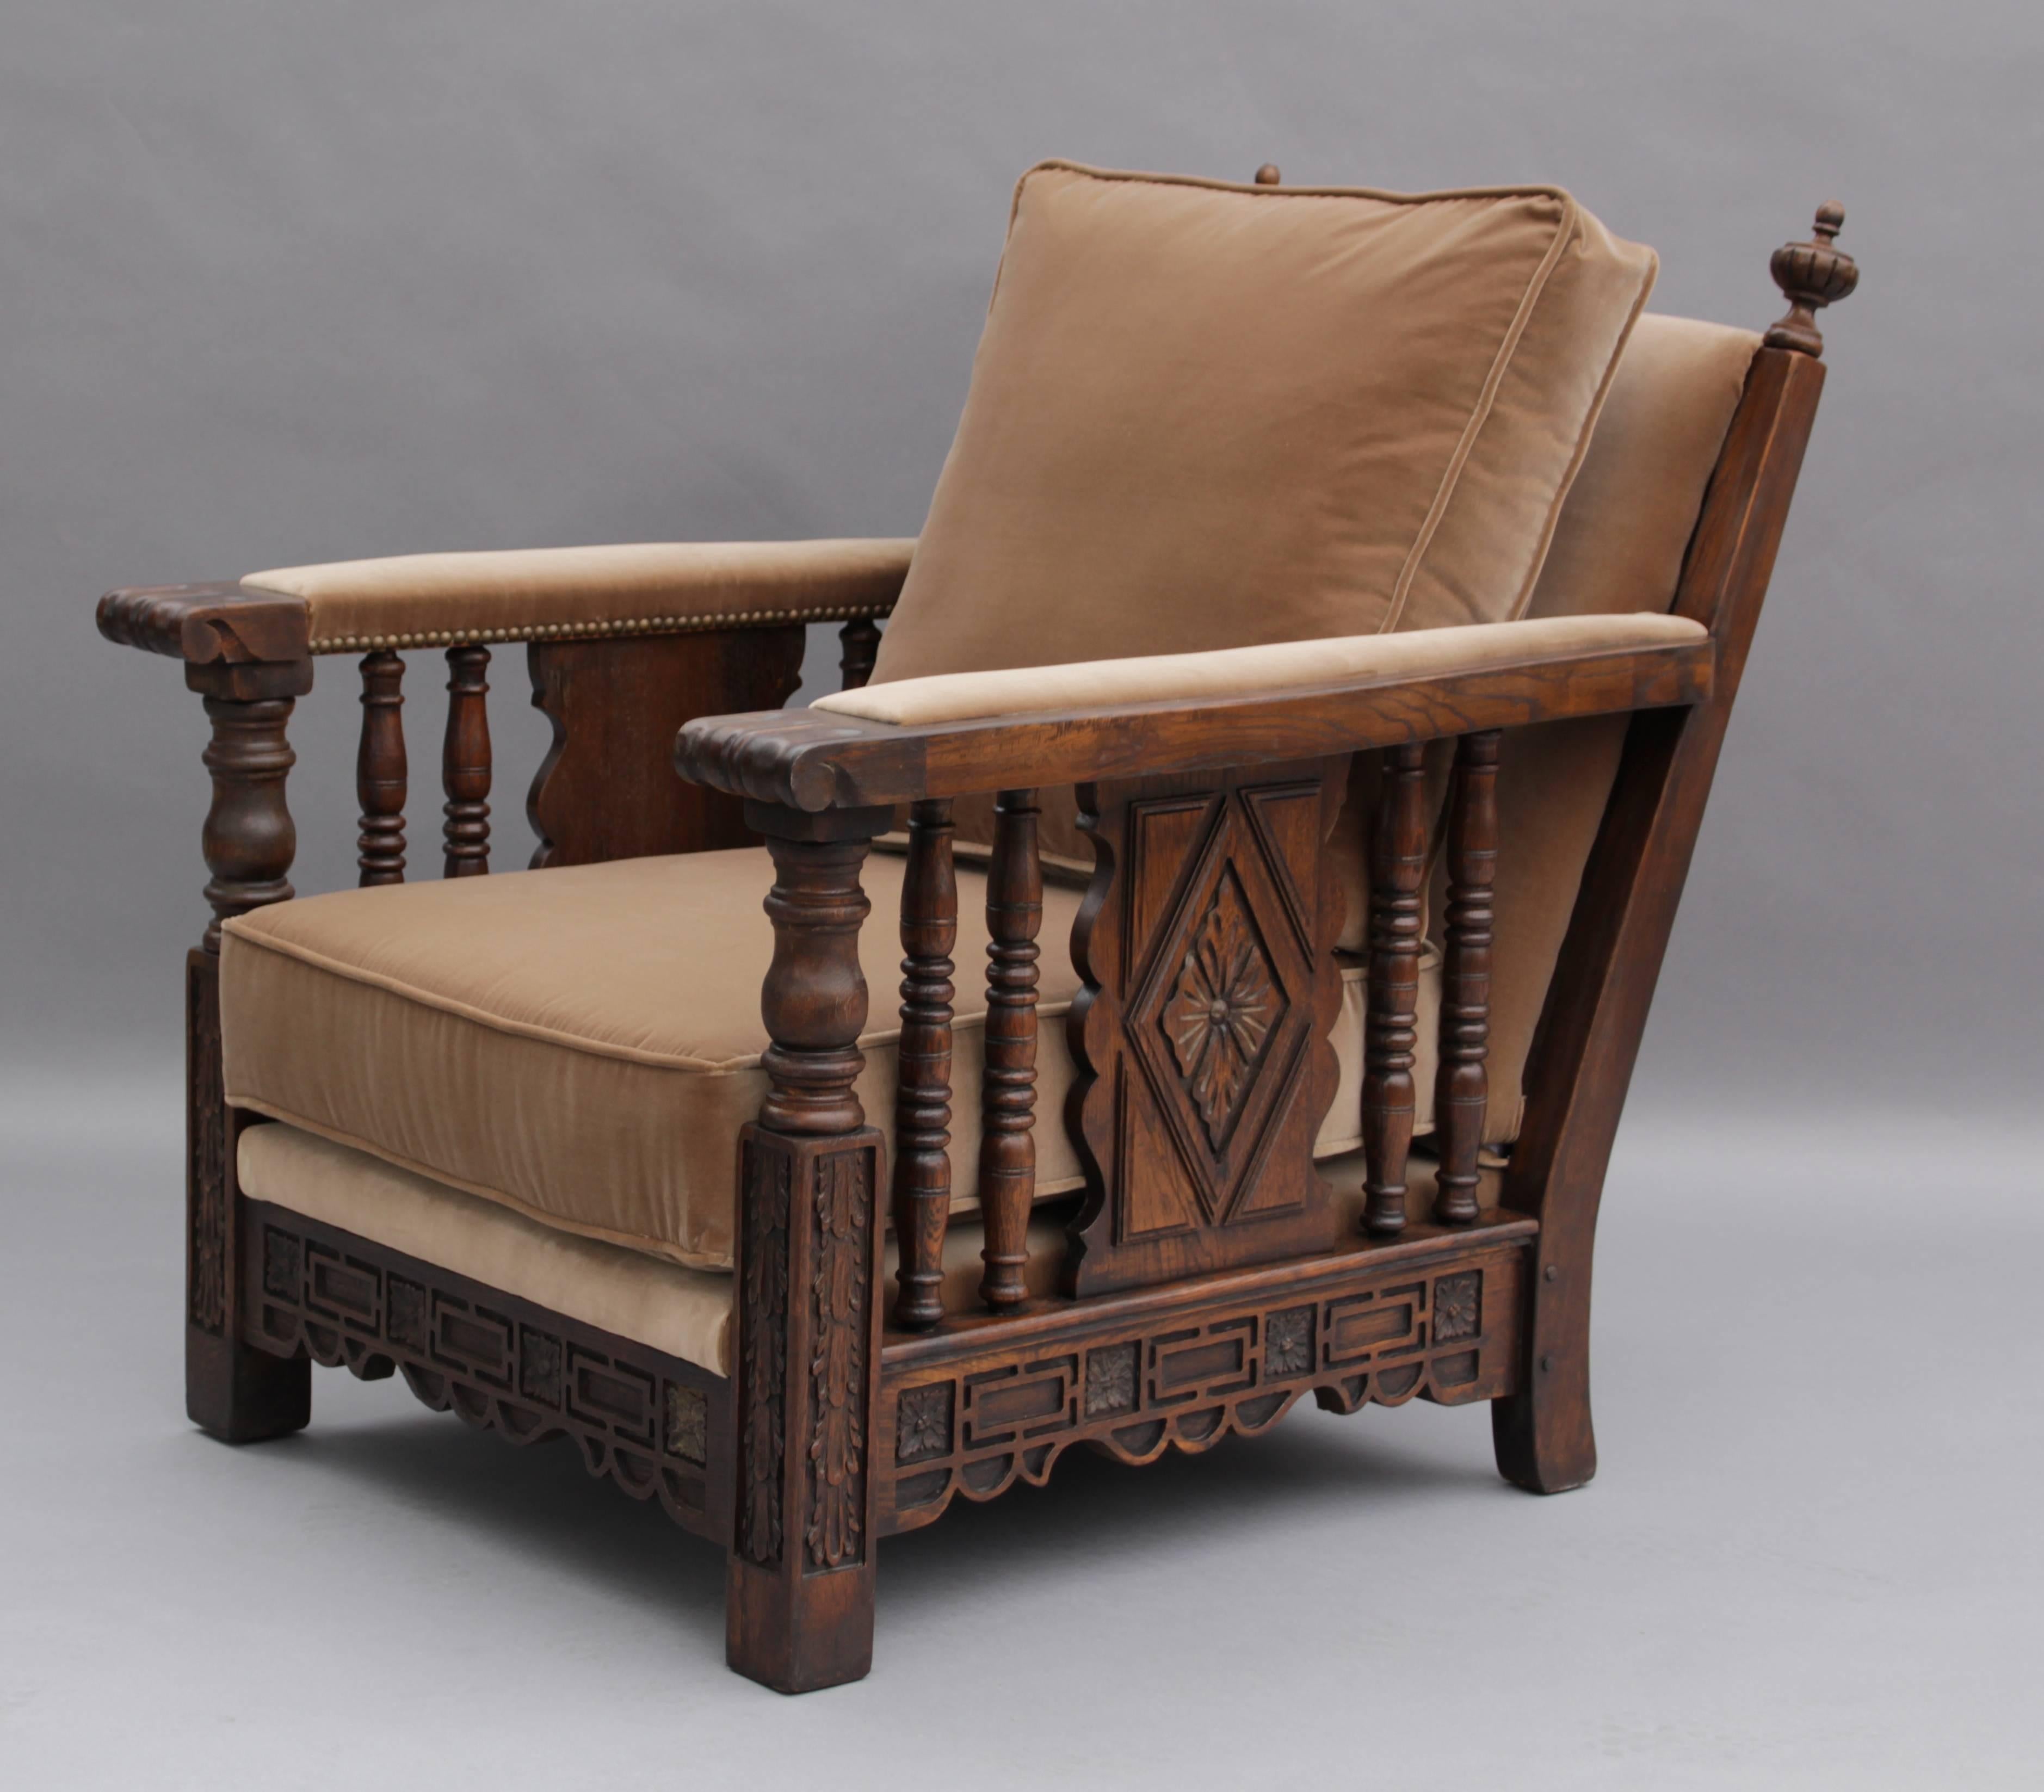 Spanish Revival armchair with new velvet upholstery, circa 1920s.